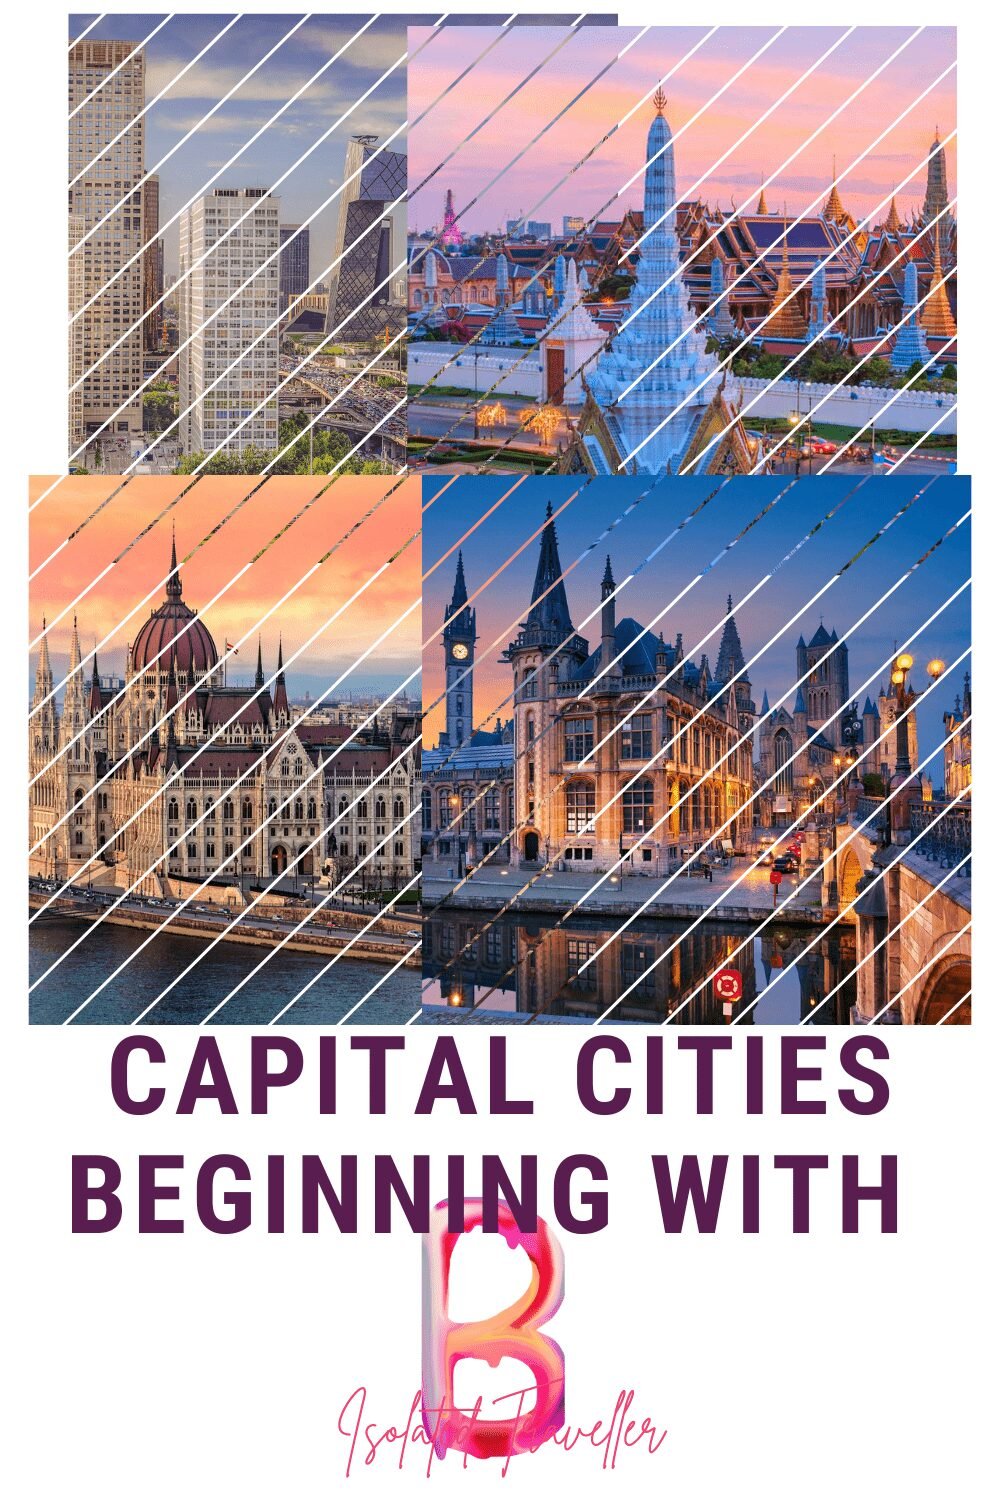 Cities beginning with B